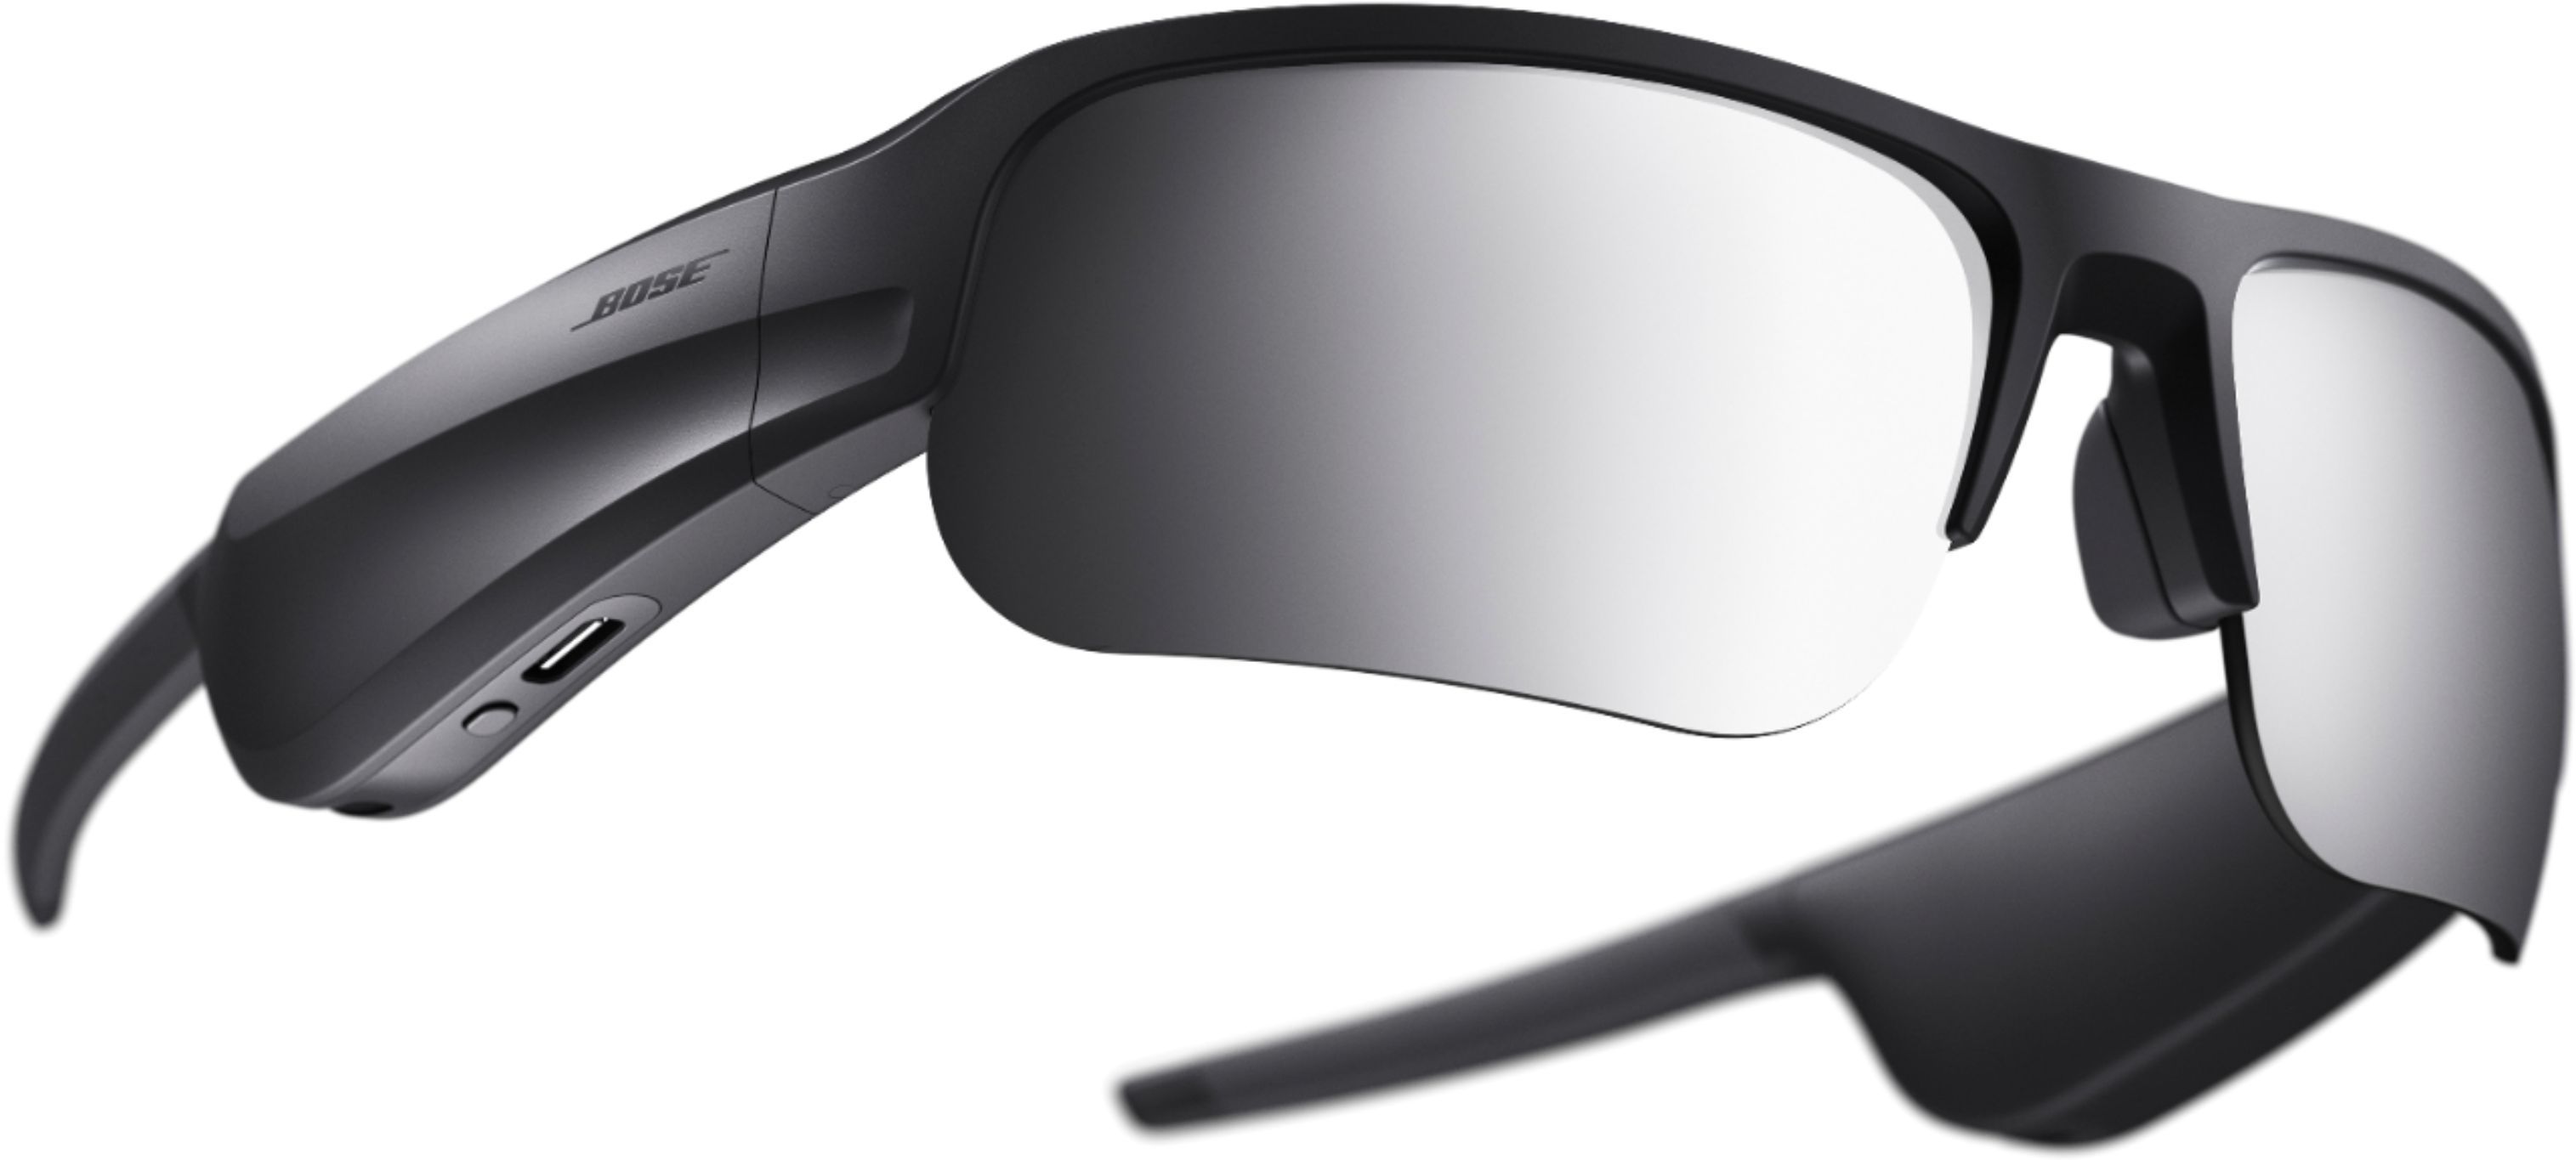 Bose Frames Tempo – Sports Audio Sunglasses with Polarized Lenses Black 839767-0110 - Best Buy | Best Buy U.S.